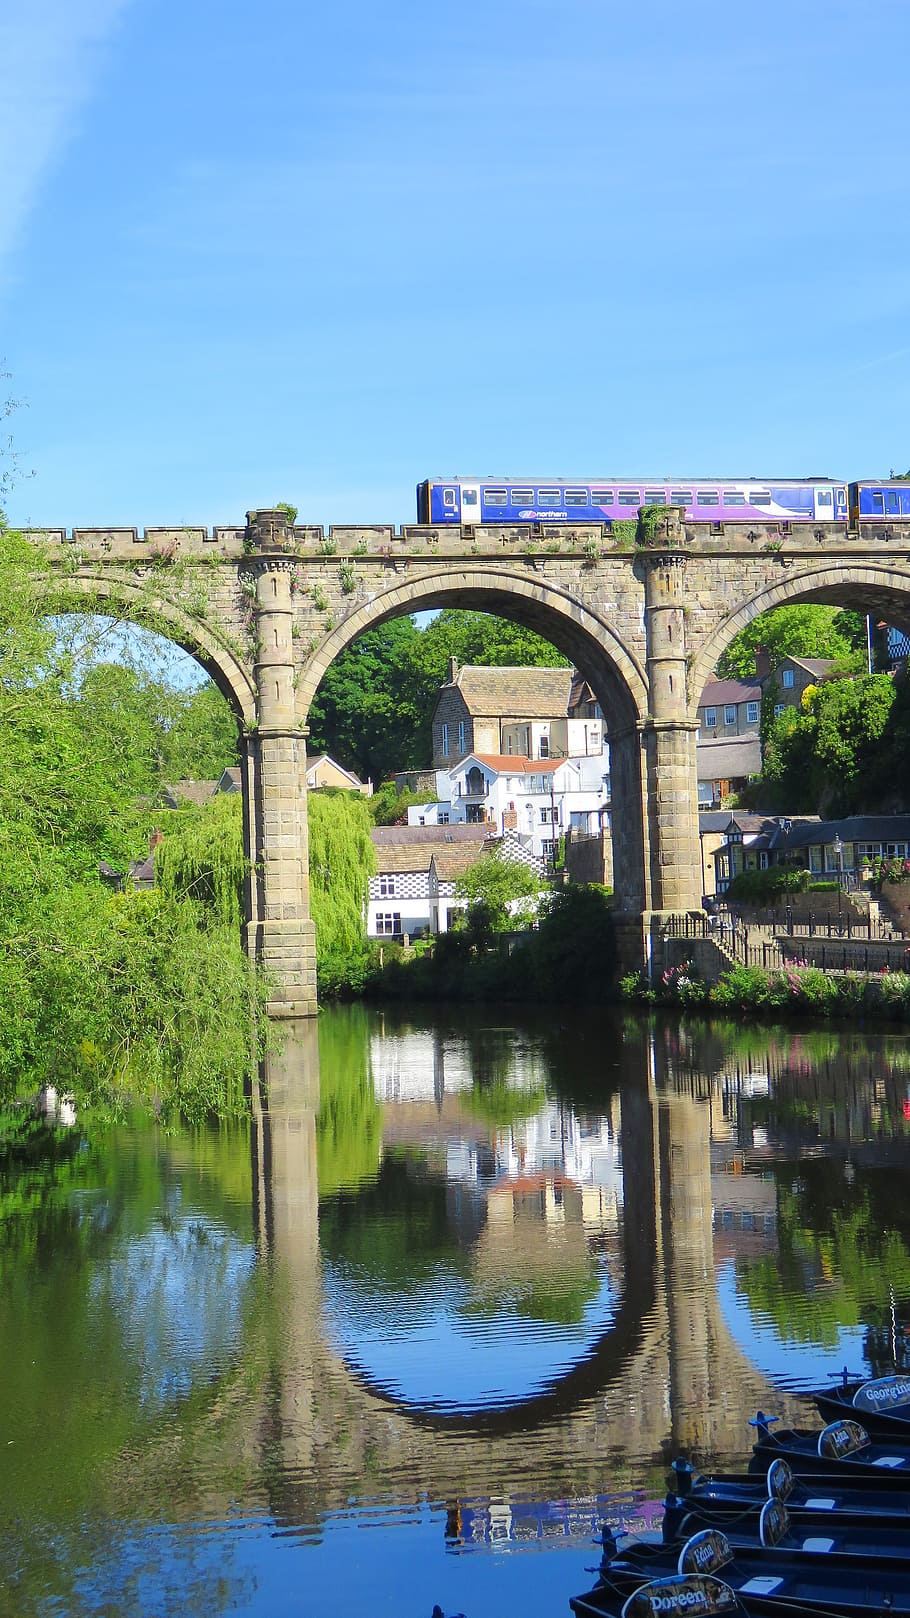 train on bridge, architecture, blue sky, bridge, june 2015, landscapes, north yorkshire, outdoor location, outdoor photography, railway